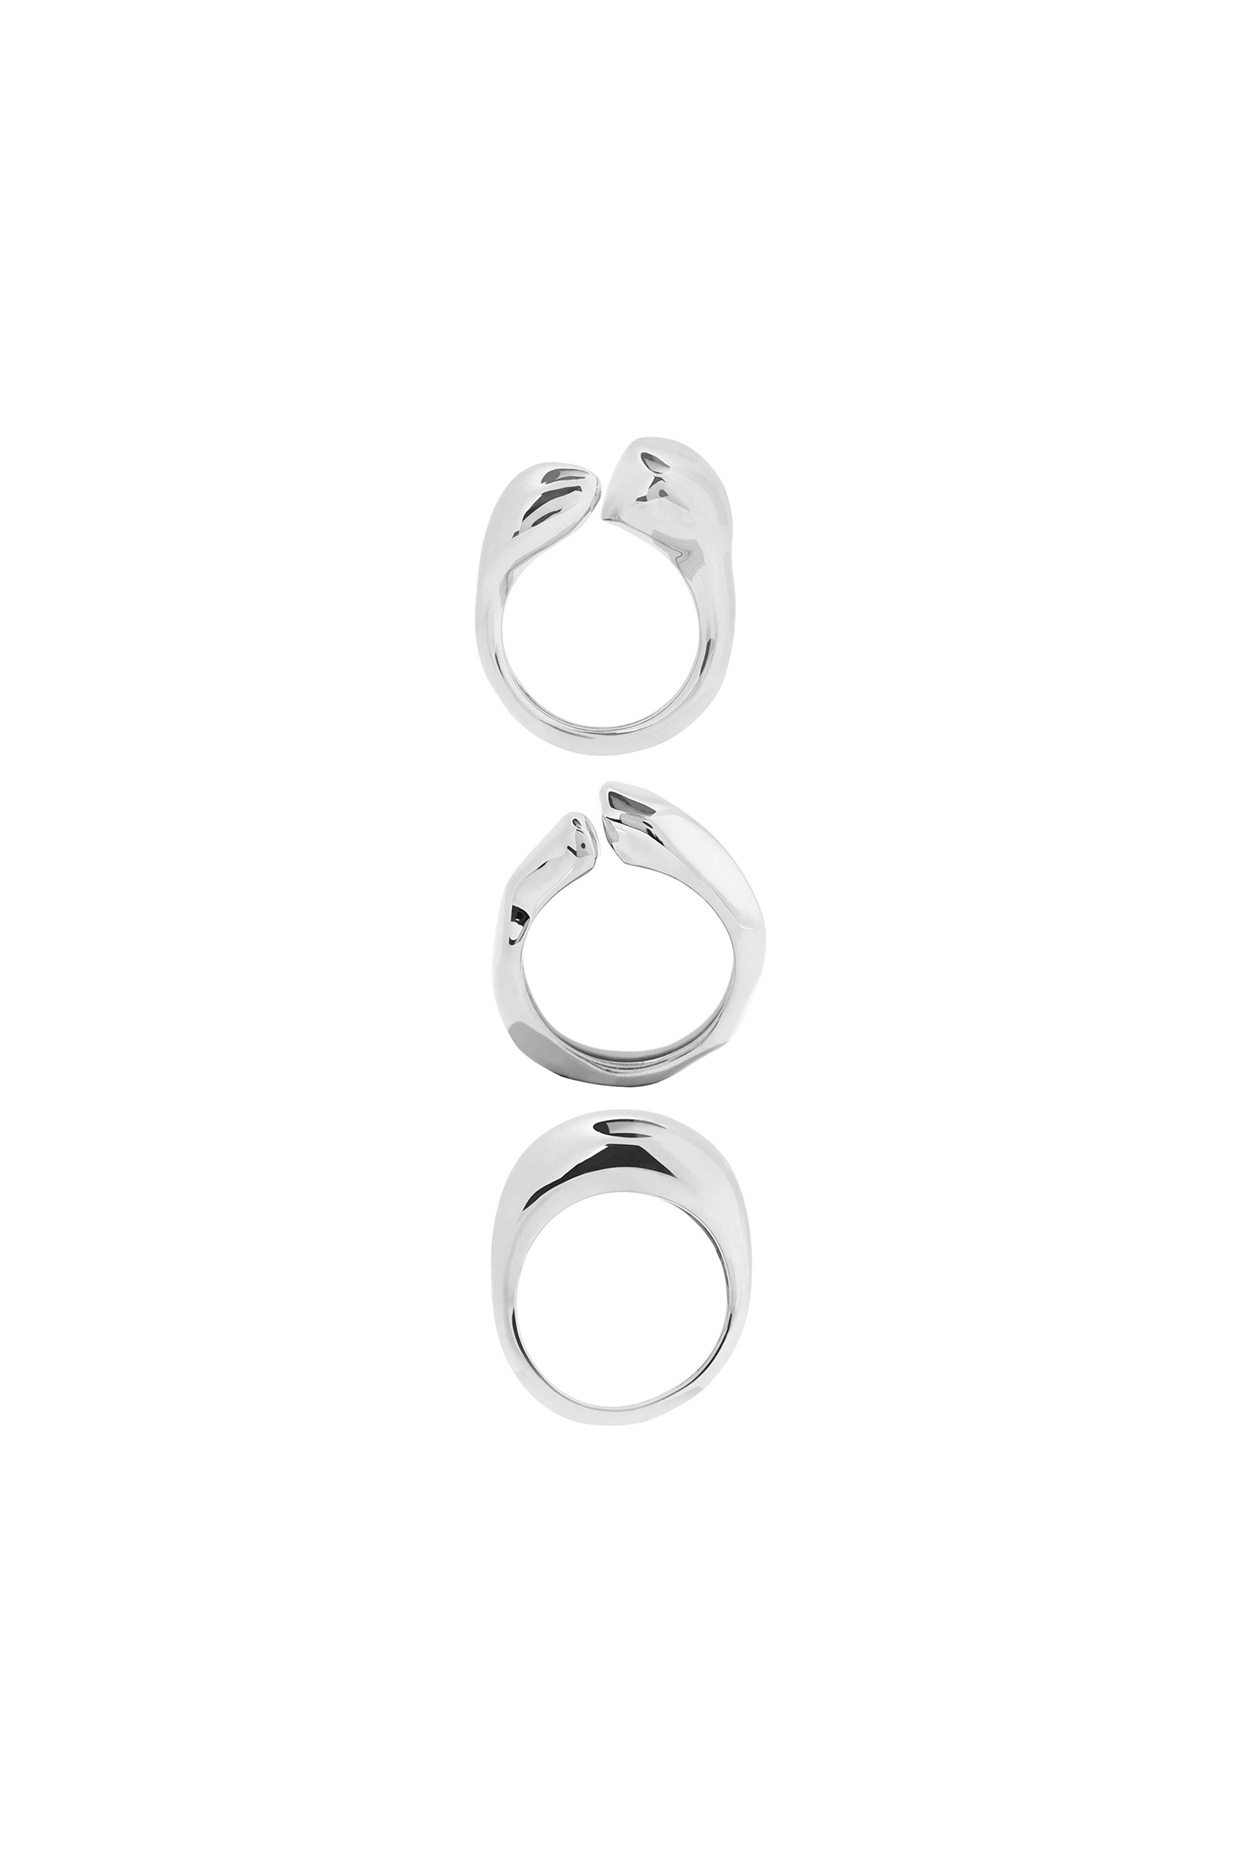 Adjustable Ring For Women - 925 Sterling Silver Thumb Ring - Silver Rings  Girls - Finger Rings Set- Gift For Wedding Promise Rings Mum Mother's Day,  W | Fruugo KR